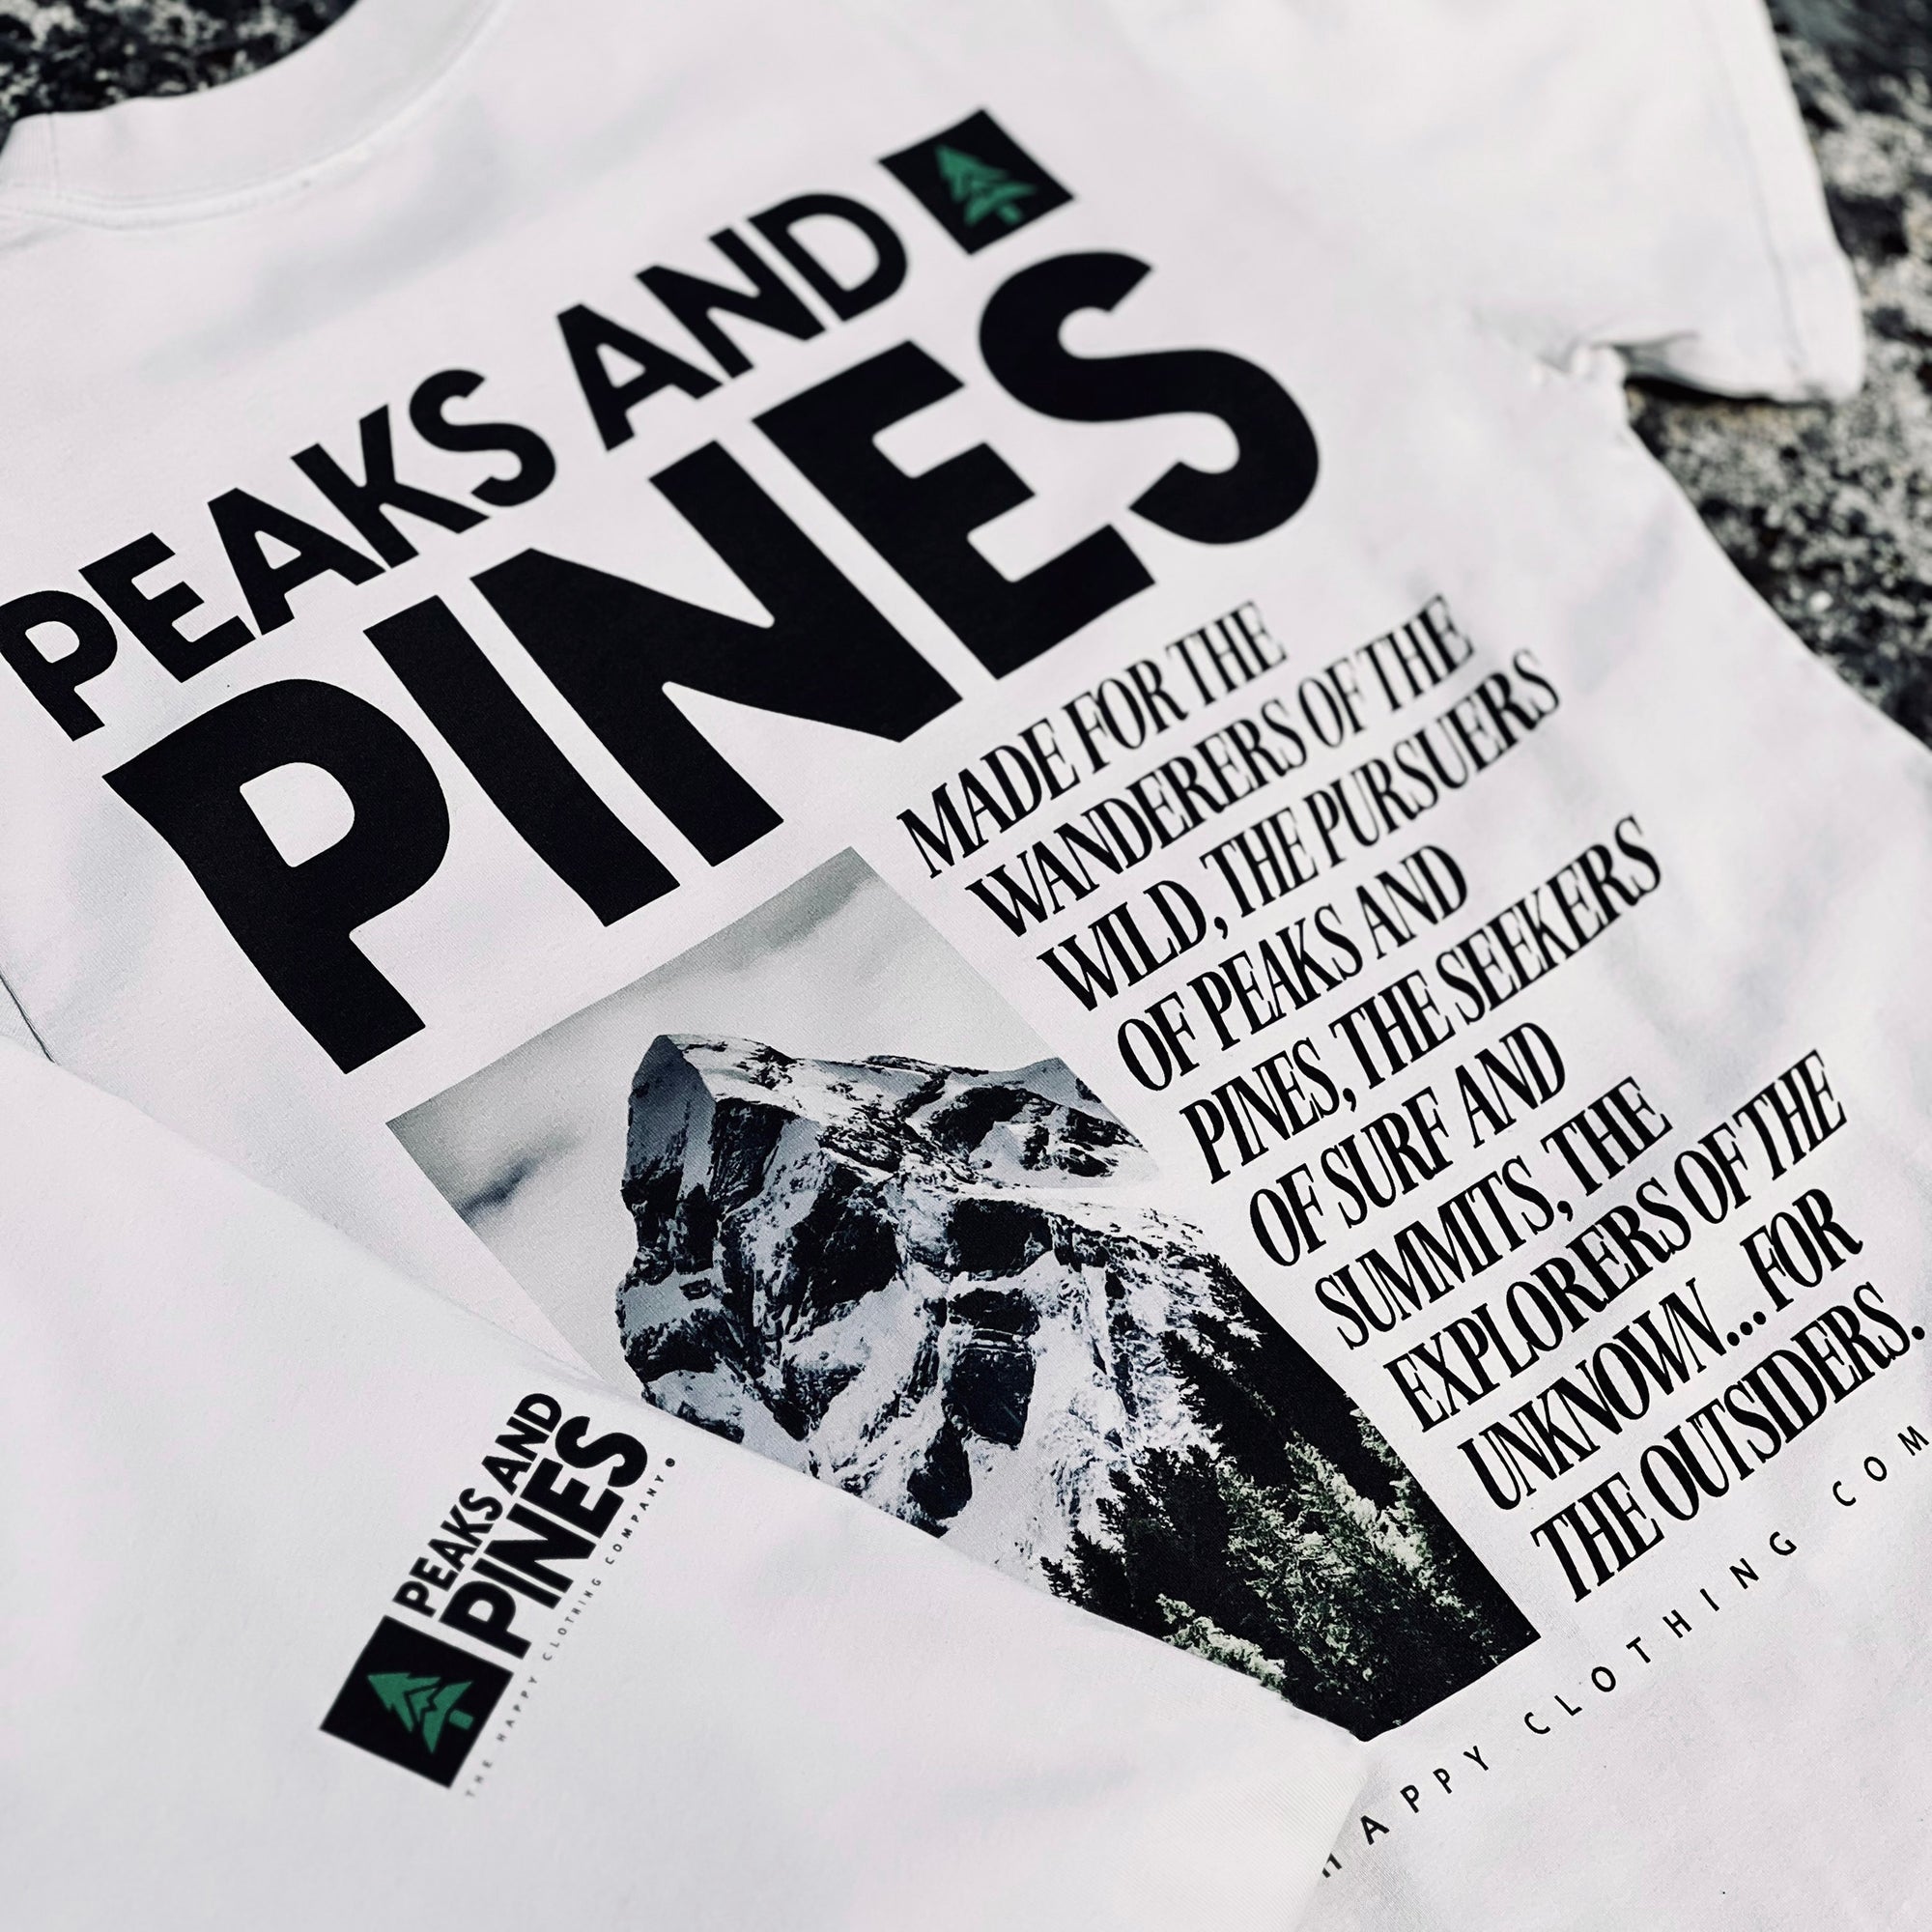 Peaks and Pines Back Print 'Vintage Tee' | Oversized Heavyweight |